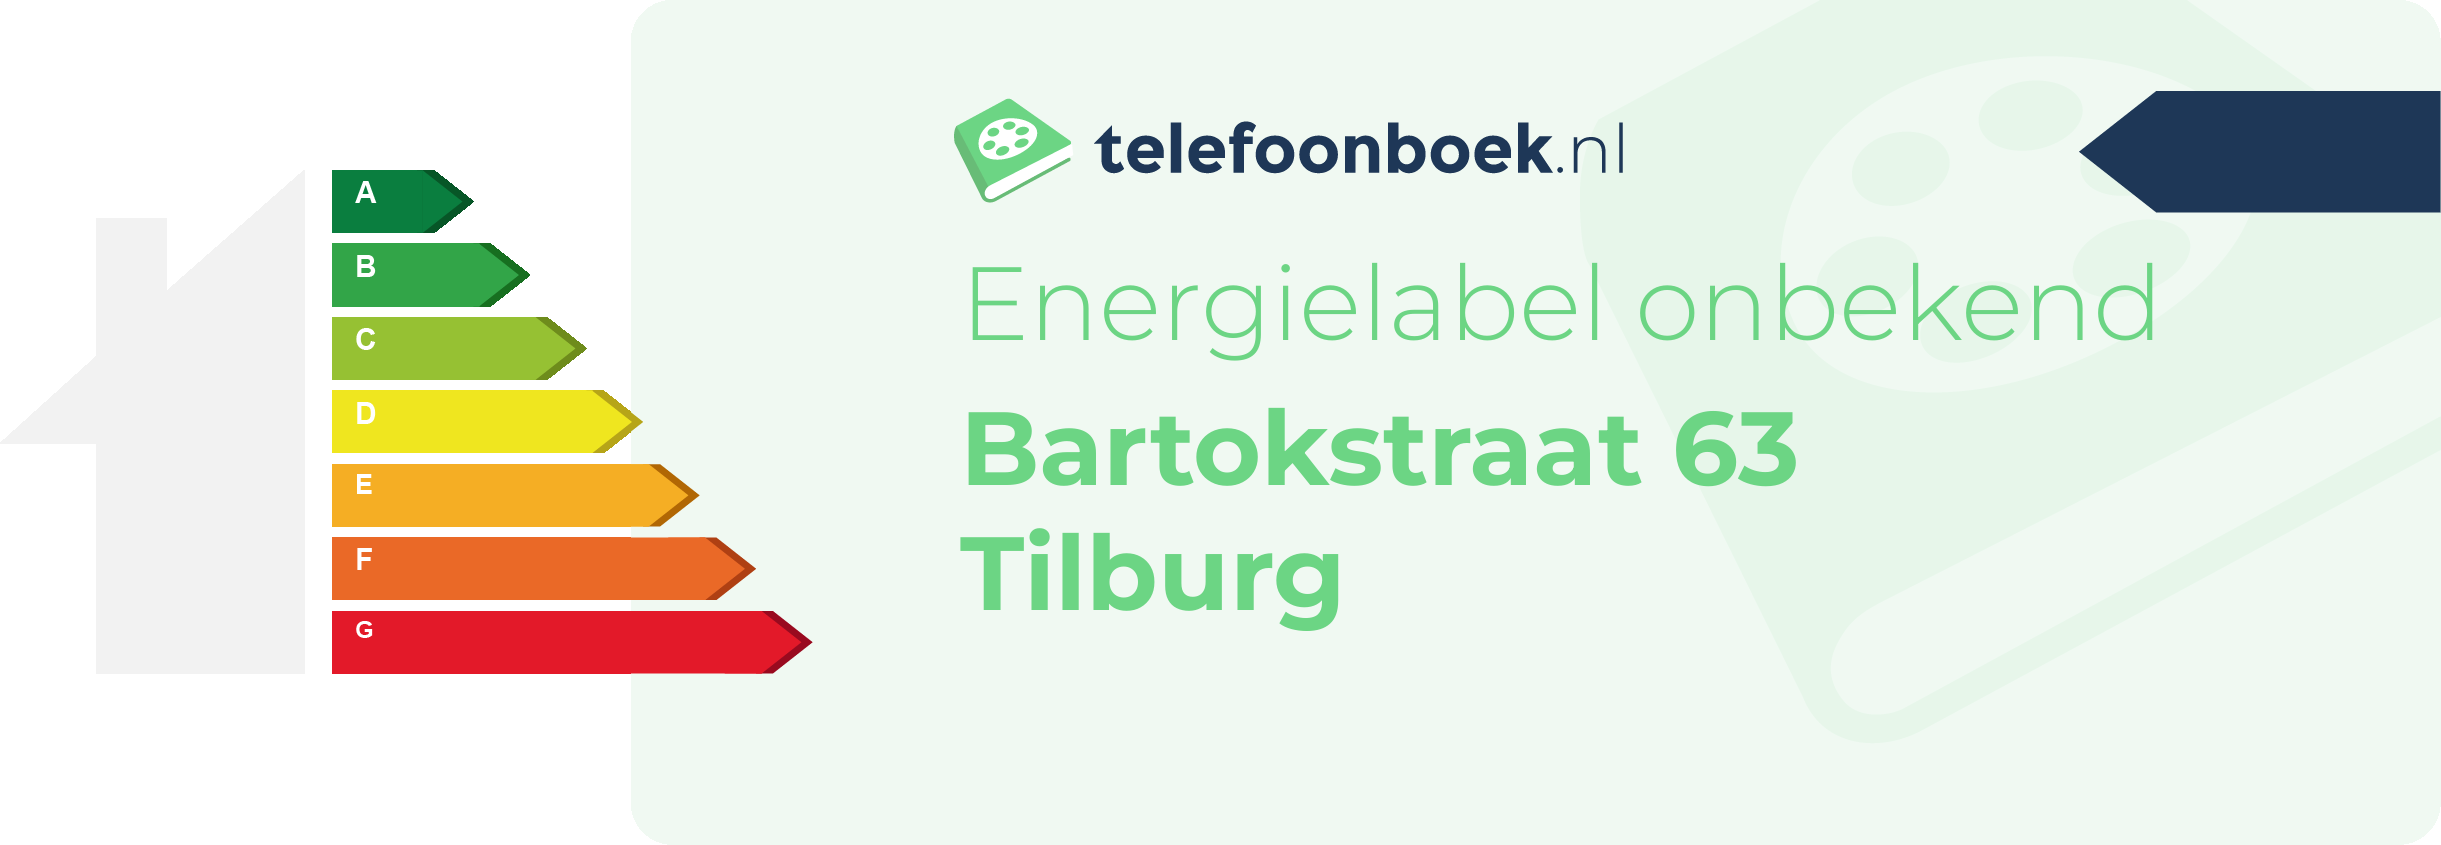 Energielabel Bartokstraat 63 Tilburg